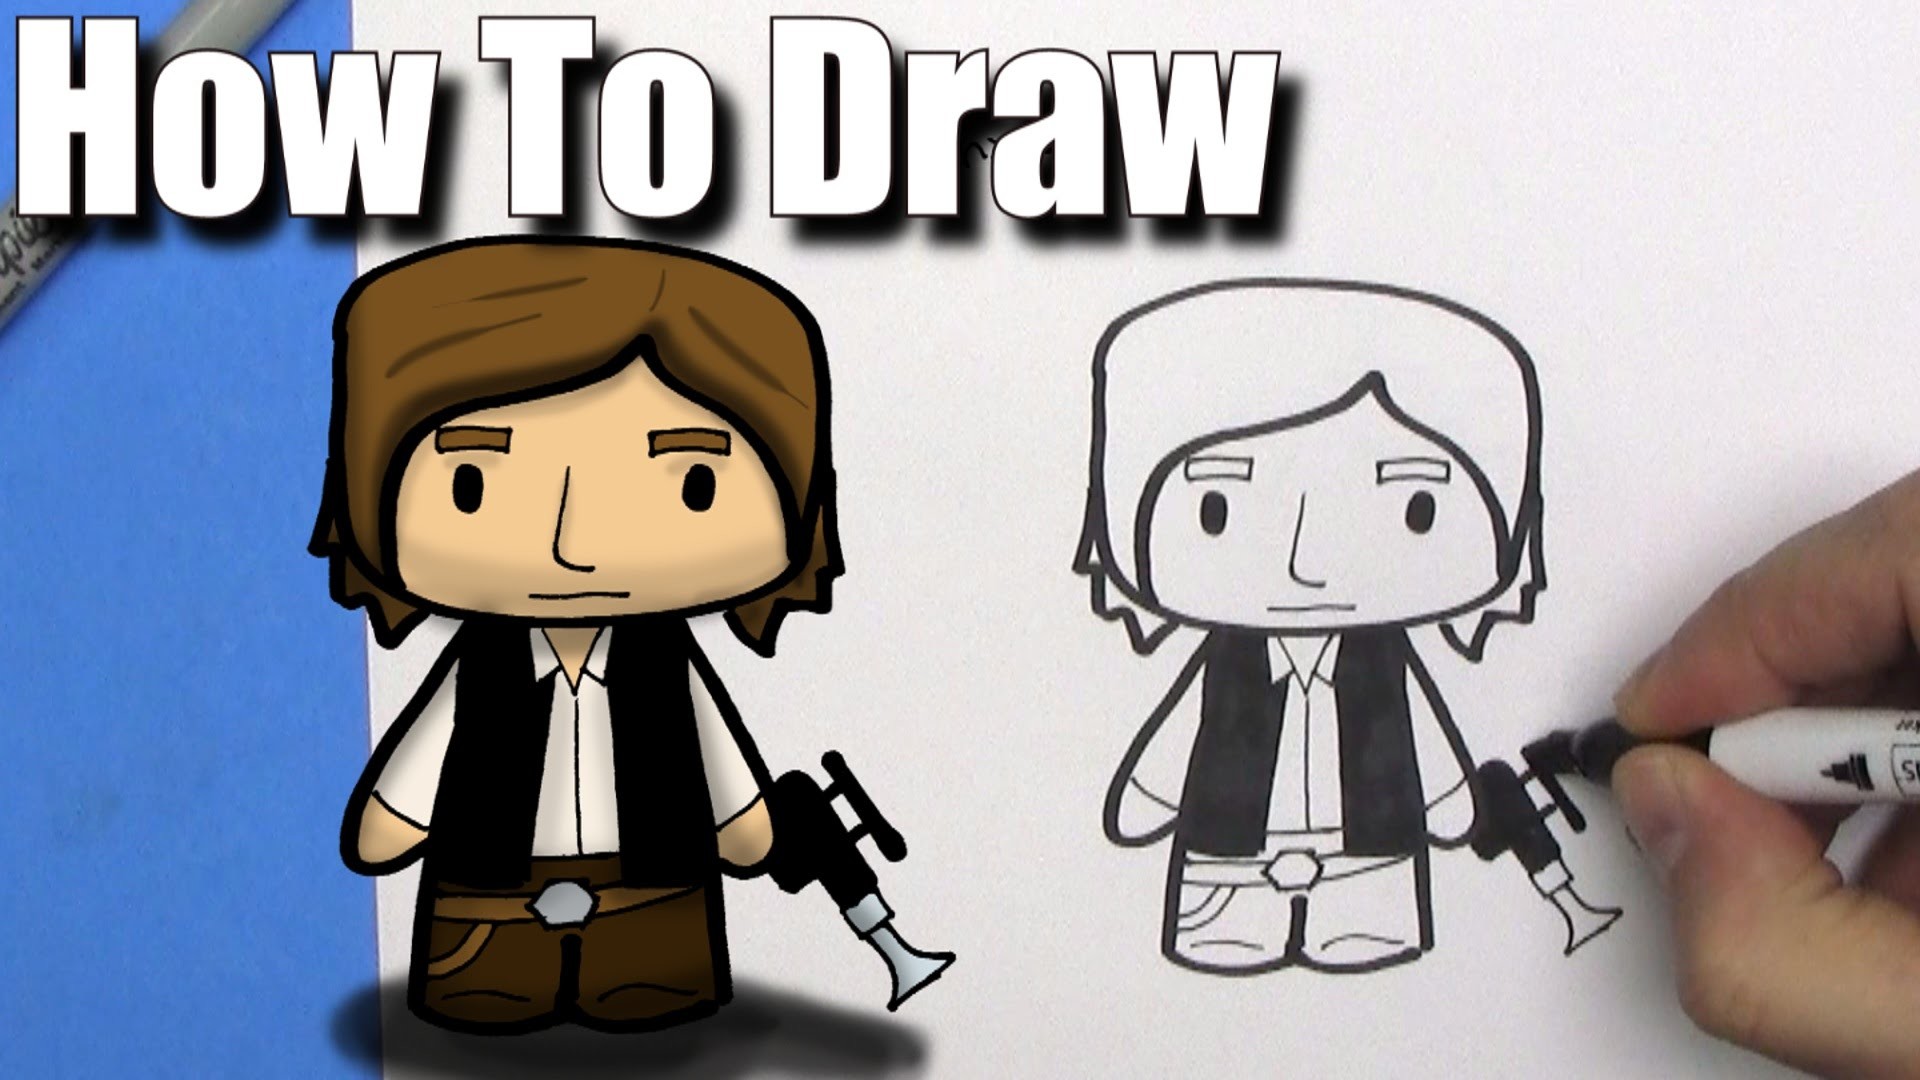 1920x1080 How To Draw a Cute Cartoon Han Solo - EASY Chibi - Step By Step - Kawaii -  YouTube